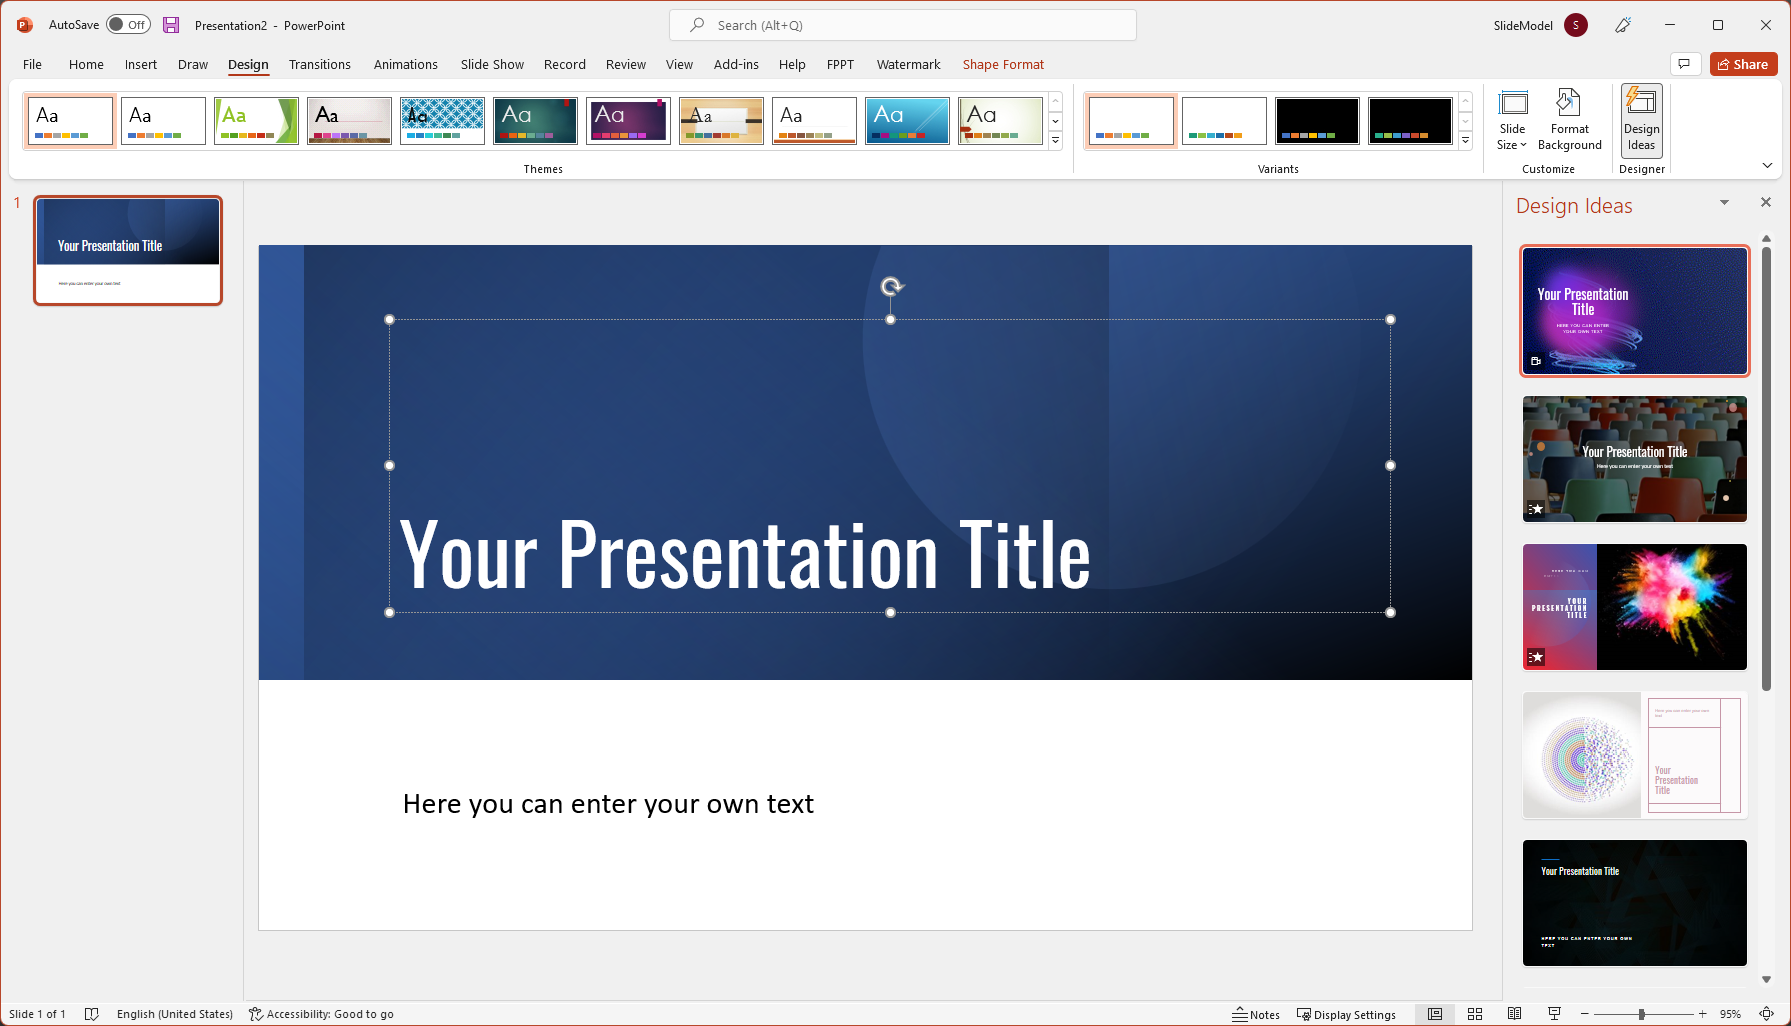 presentation design ideas images